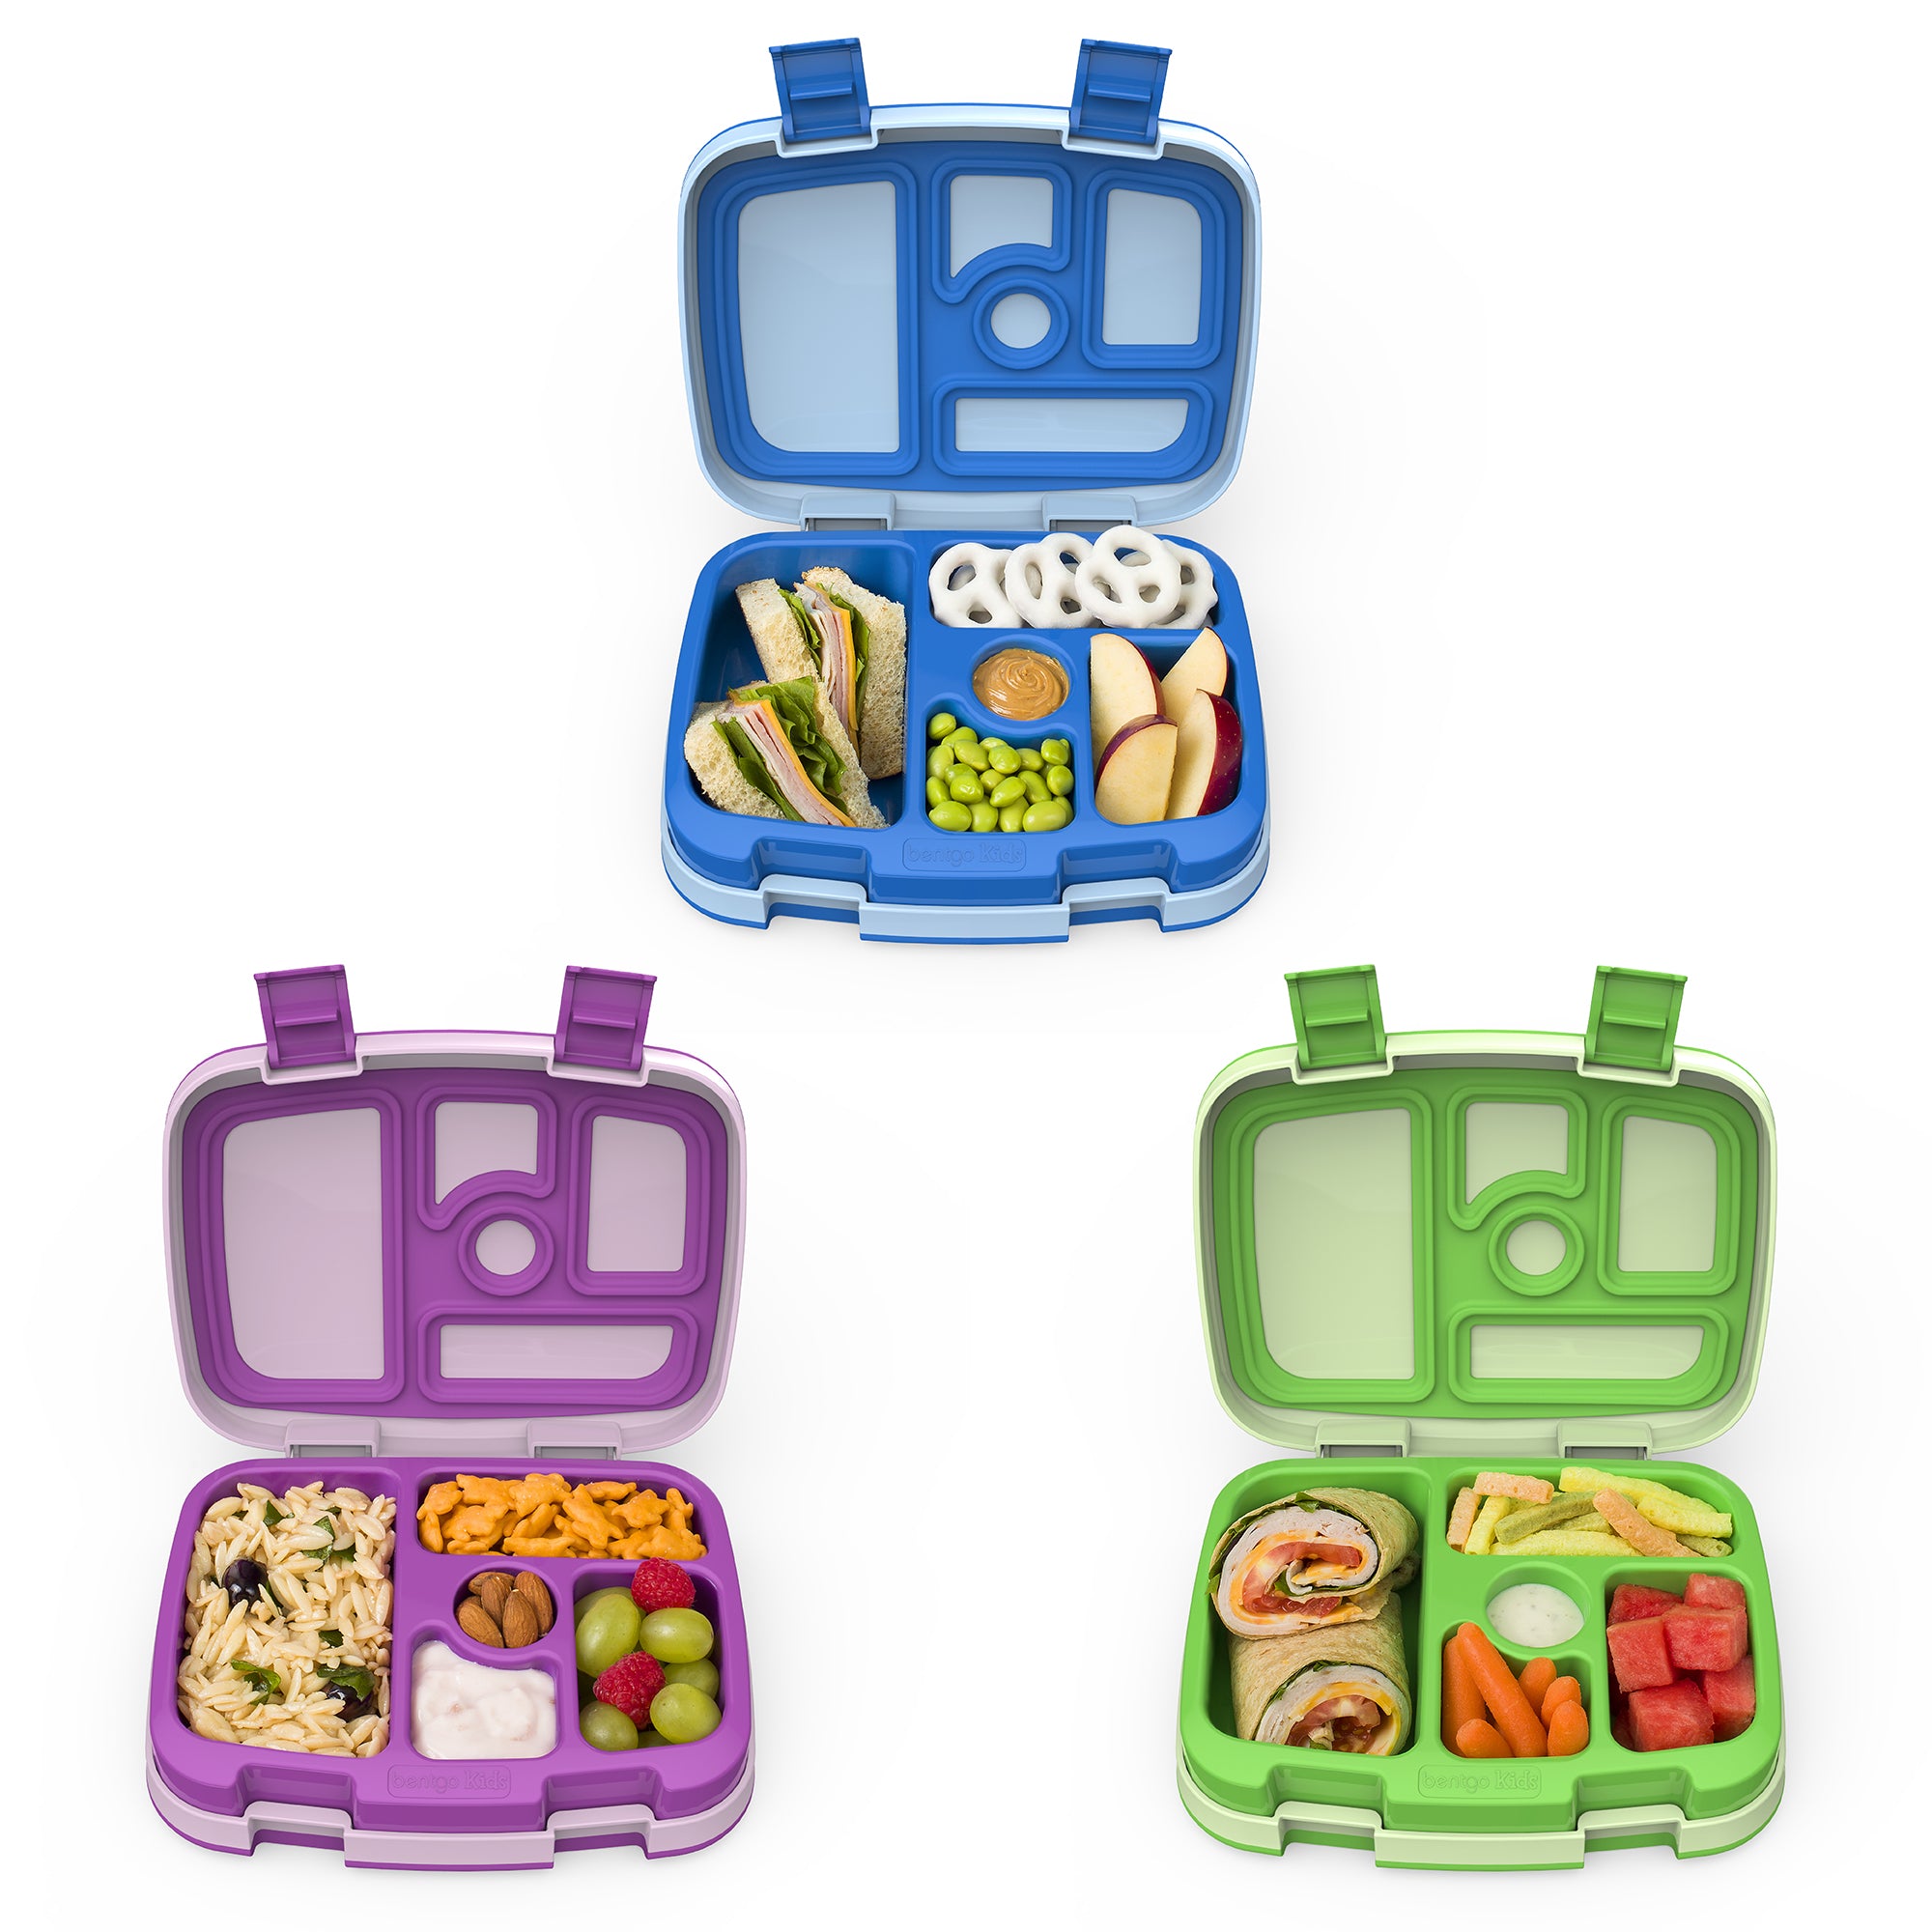 Bentgo Kids Lunch Box (3-Pack)